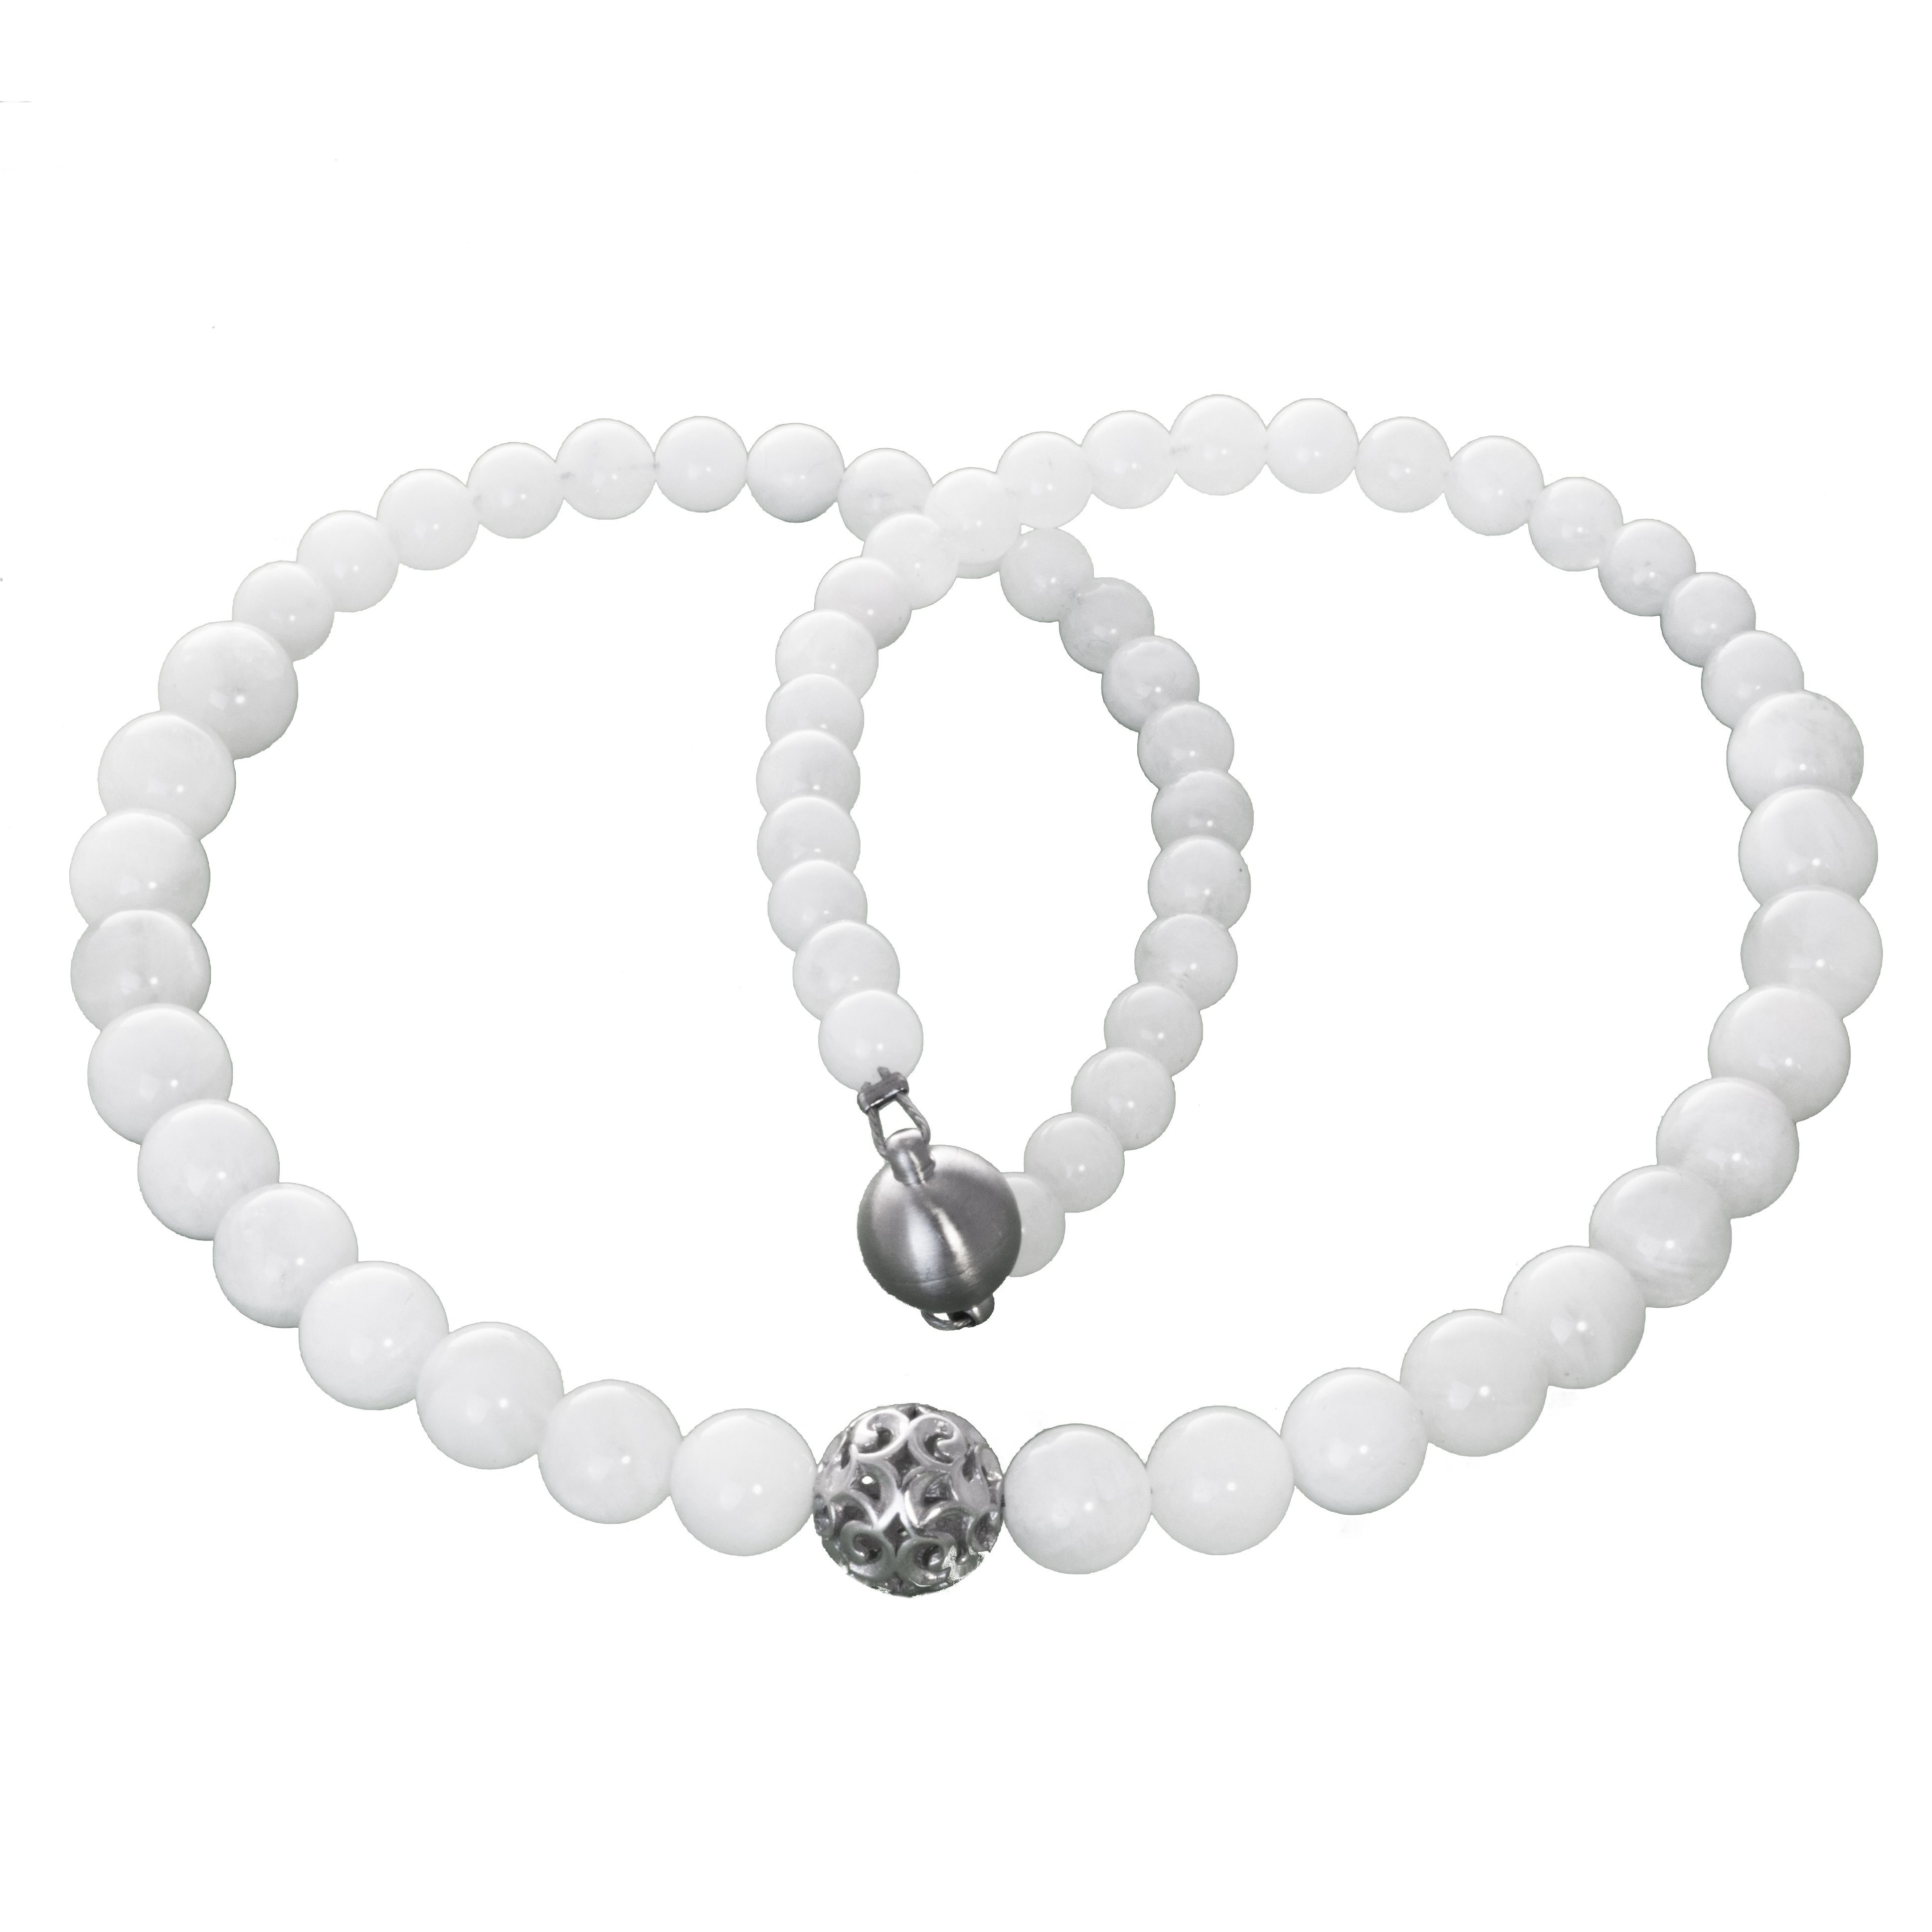 Bella Carina Perlenkette Kette mit echtem Mondstein und Silber Perle, Mondstein mit Silberperle